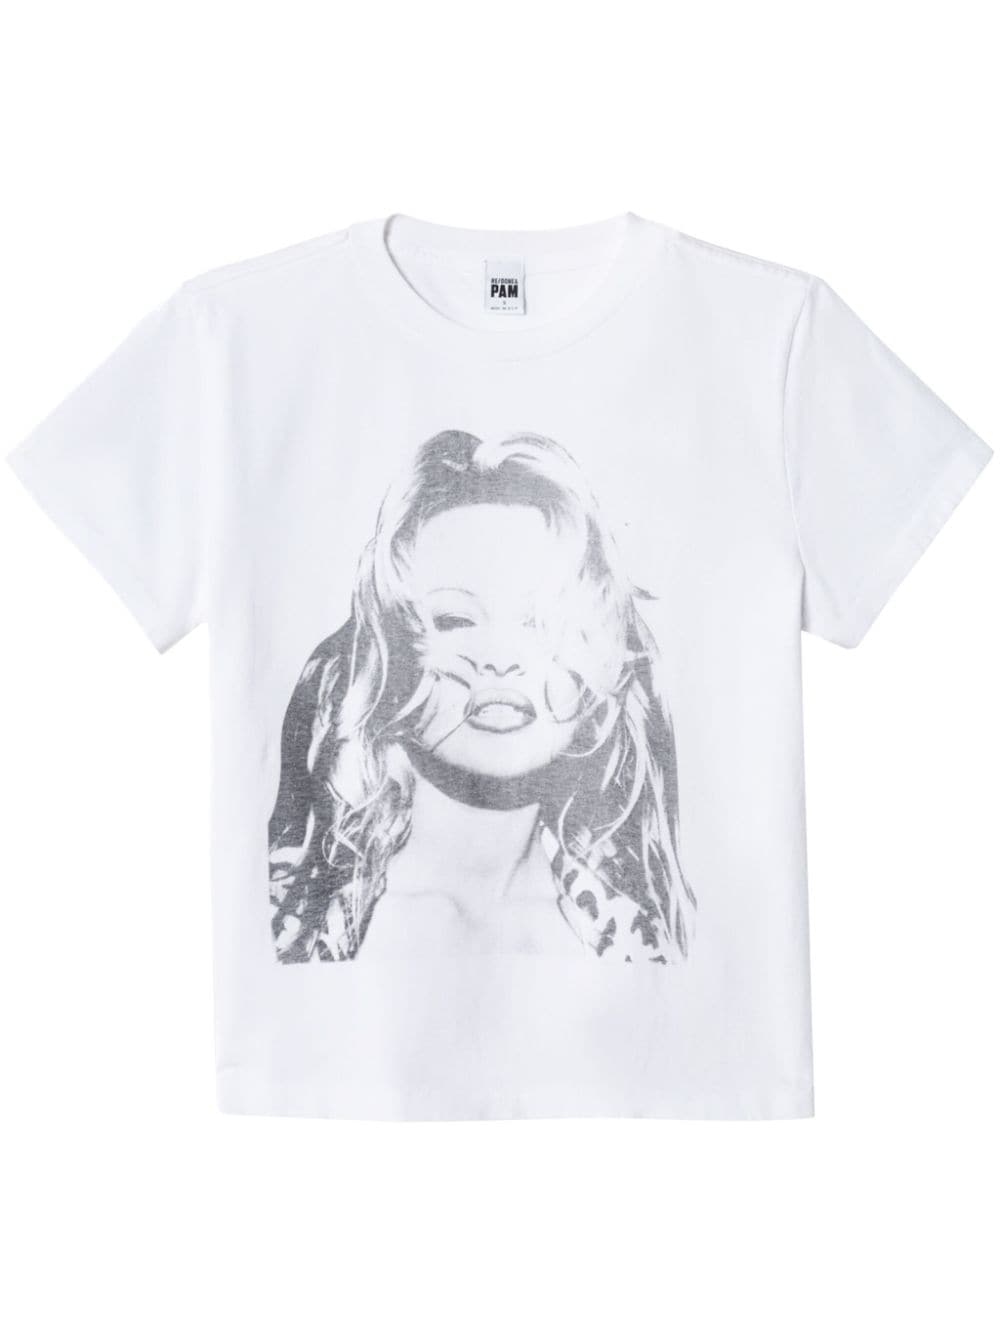 RE/DONE x Pamela Anderson cotton T-shirt - White von RE/DONE